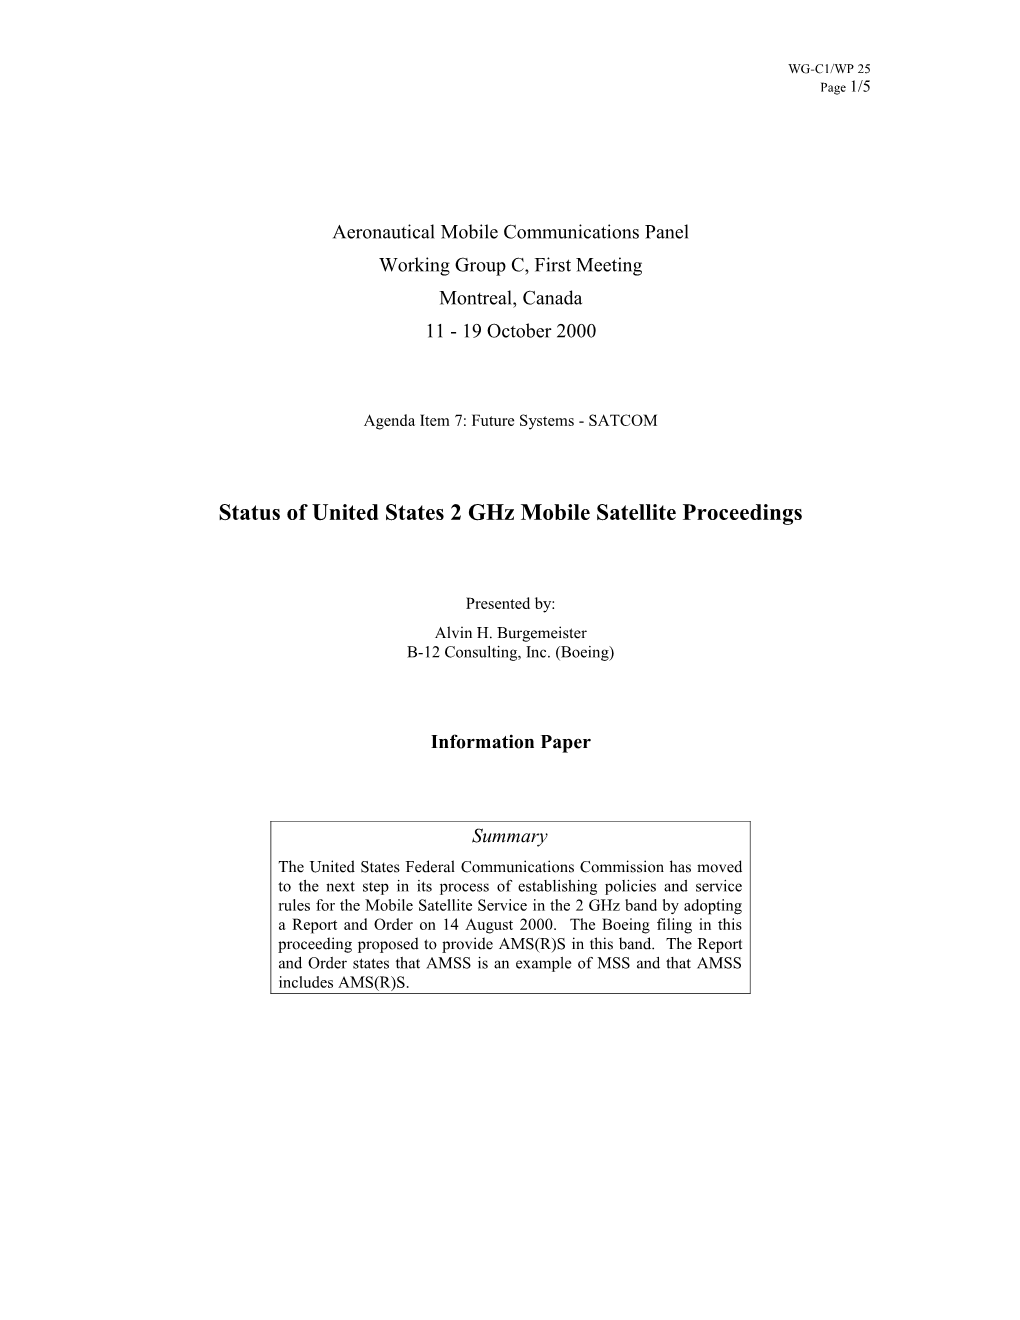 Status of United States 2 Ghz Mobile Satellite Proceedings